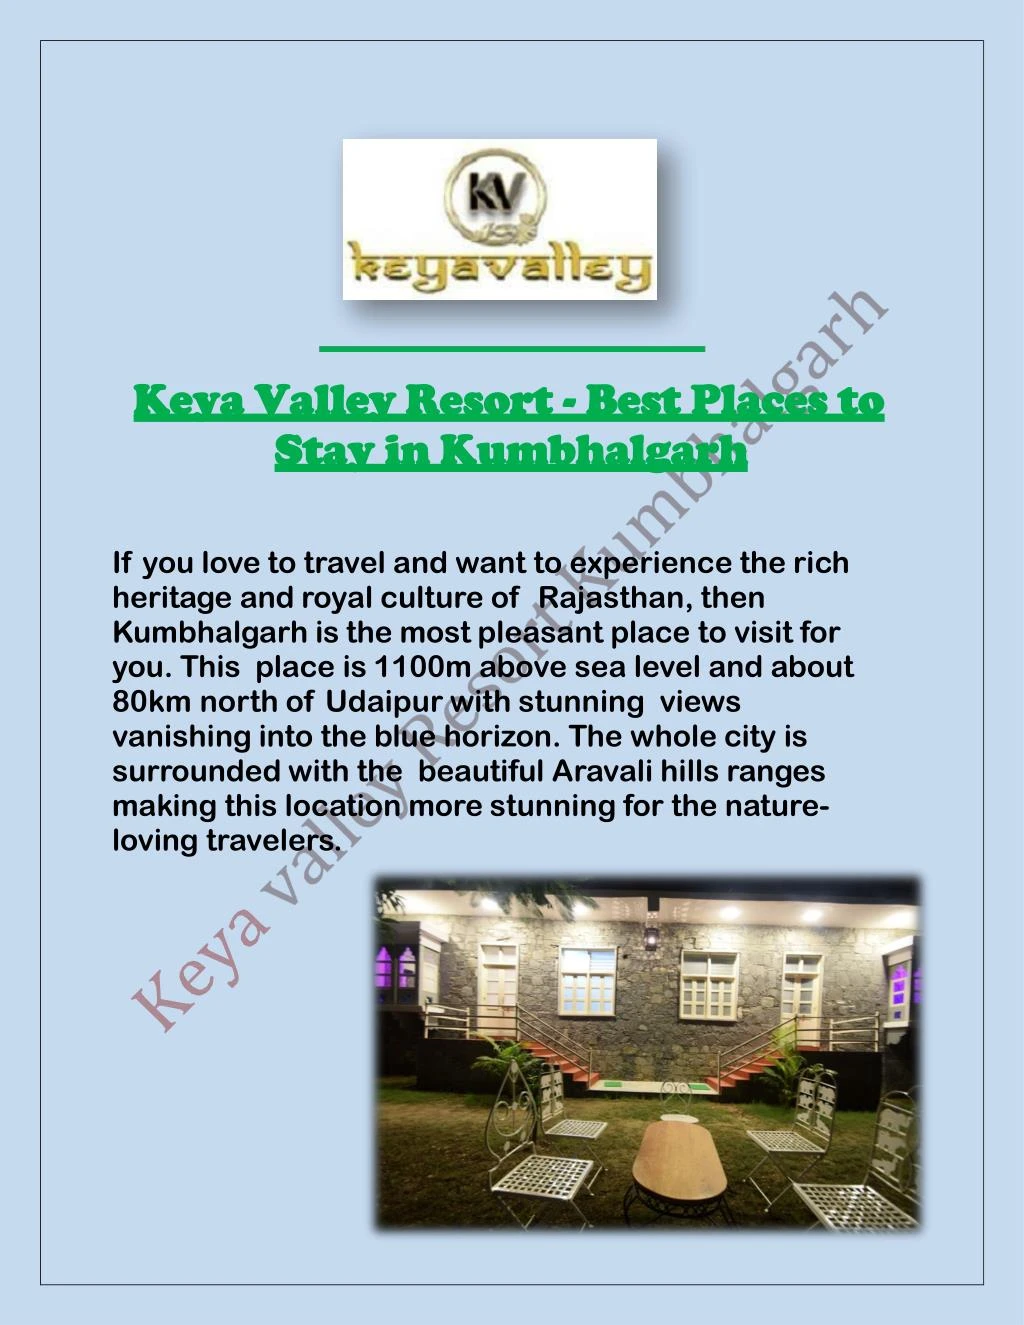 keya valley resort best places to stay in kumbhalgarh